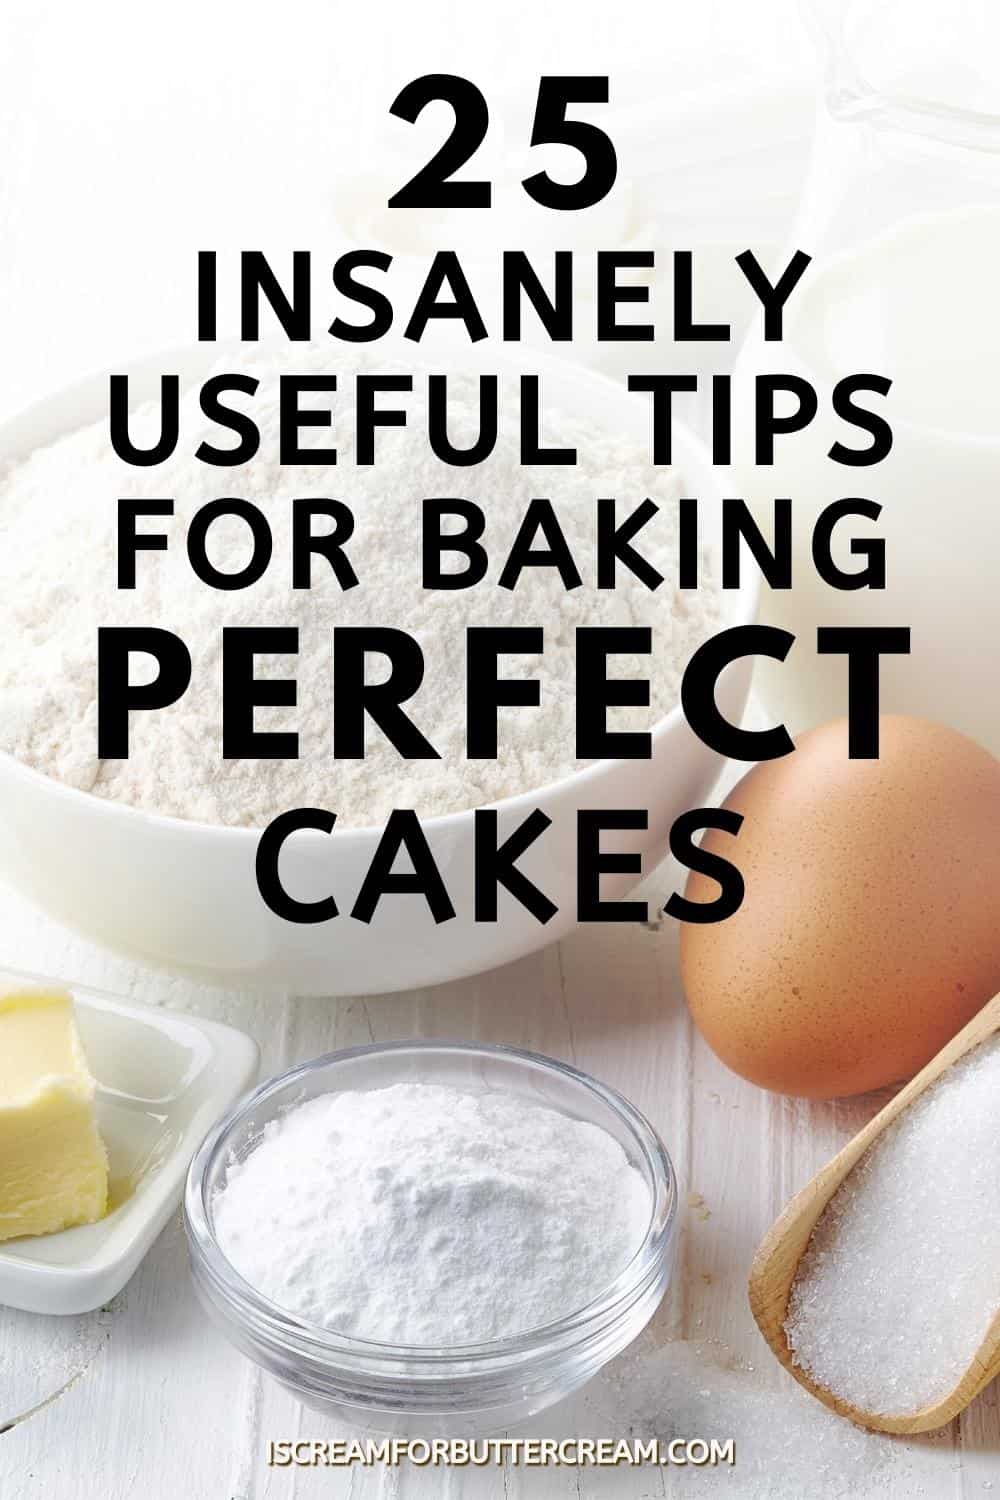 Baking cakes pin graphic with baking ingredients.